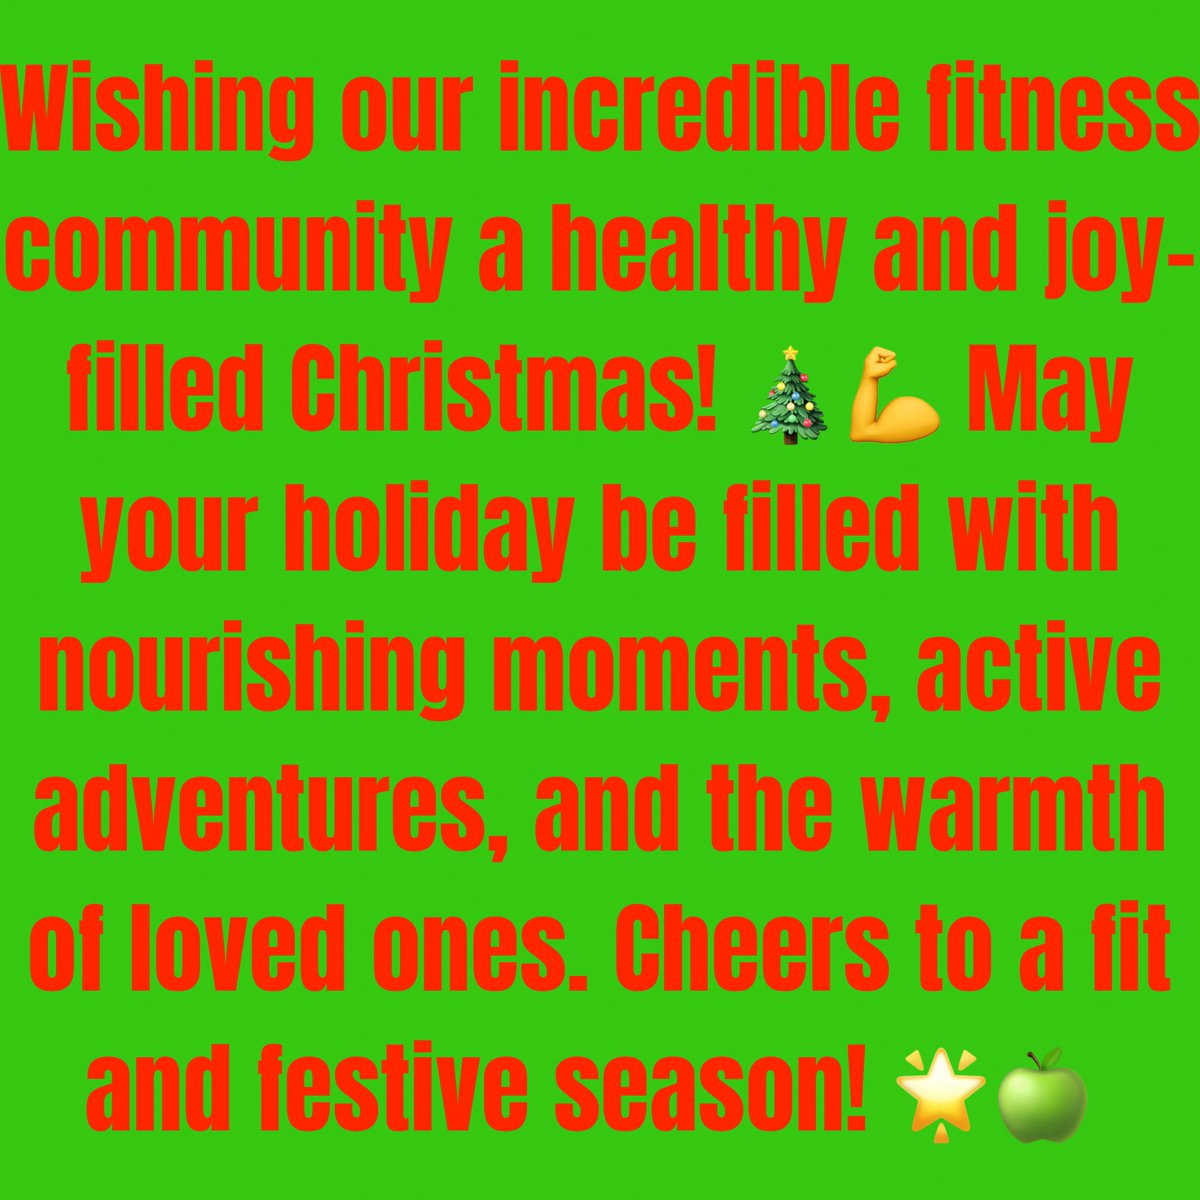 Merry Christmas!!  #FitmasFuel #HealthyHolidays #NutritionNook #ChristmasFitness #WellnessWonderland #NourishTheSeason #FitFestivities #FuelYourJoy #ActiveChristmas #MindfulEating #SeasonsStrength #HolidayWellness #FitmasJoy #HealthyHolidays #SeasonsGains #MerryFitmas